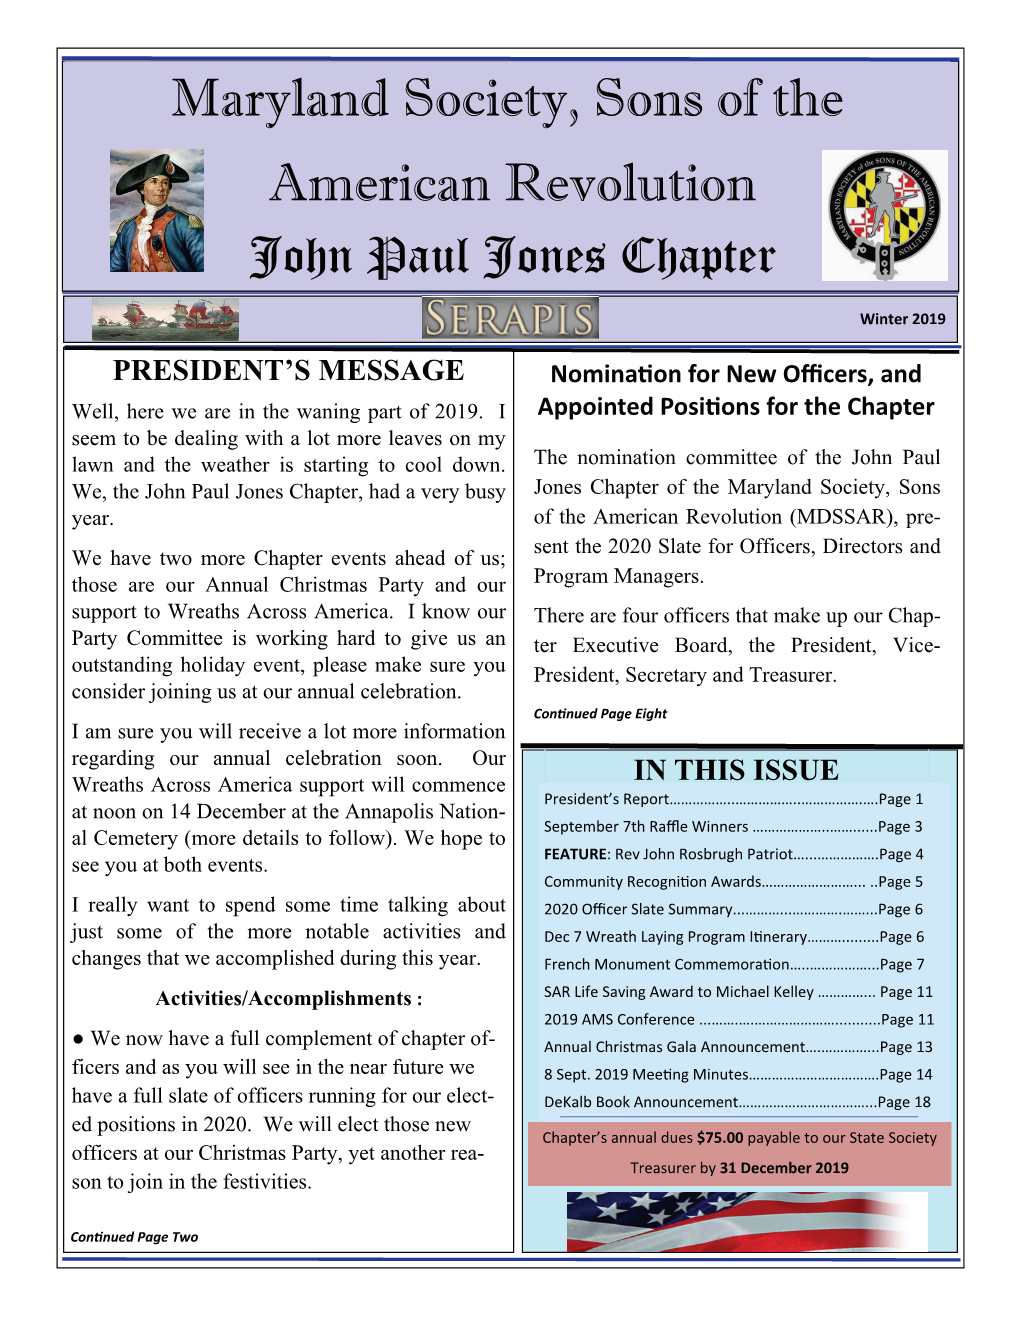 Maryland Society, Sons of the American Revolution John Paul Jones Chapter